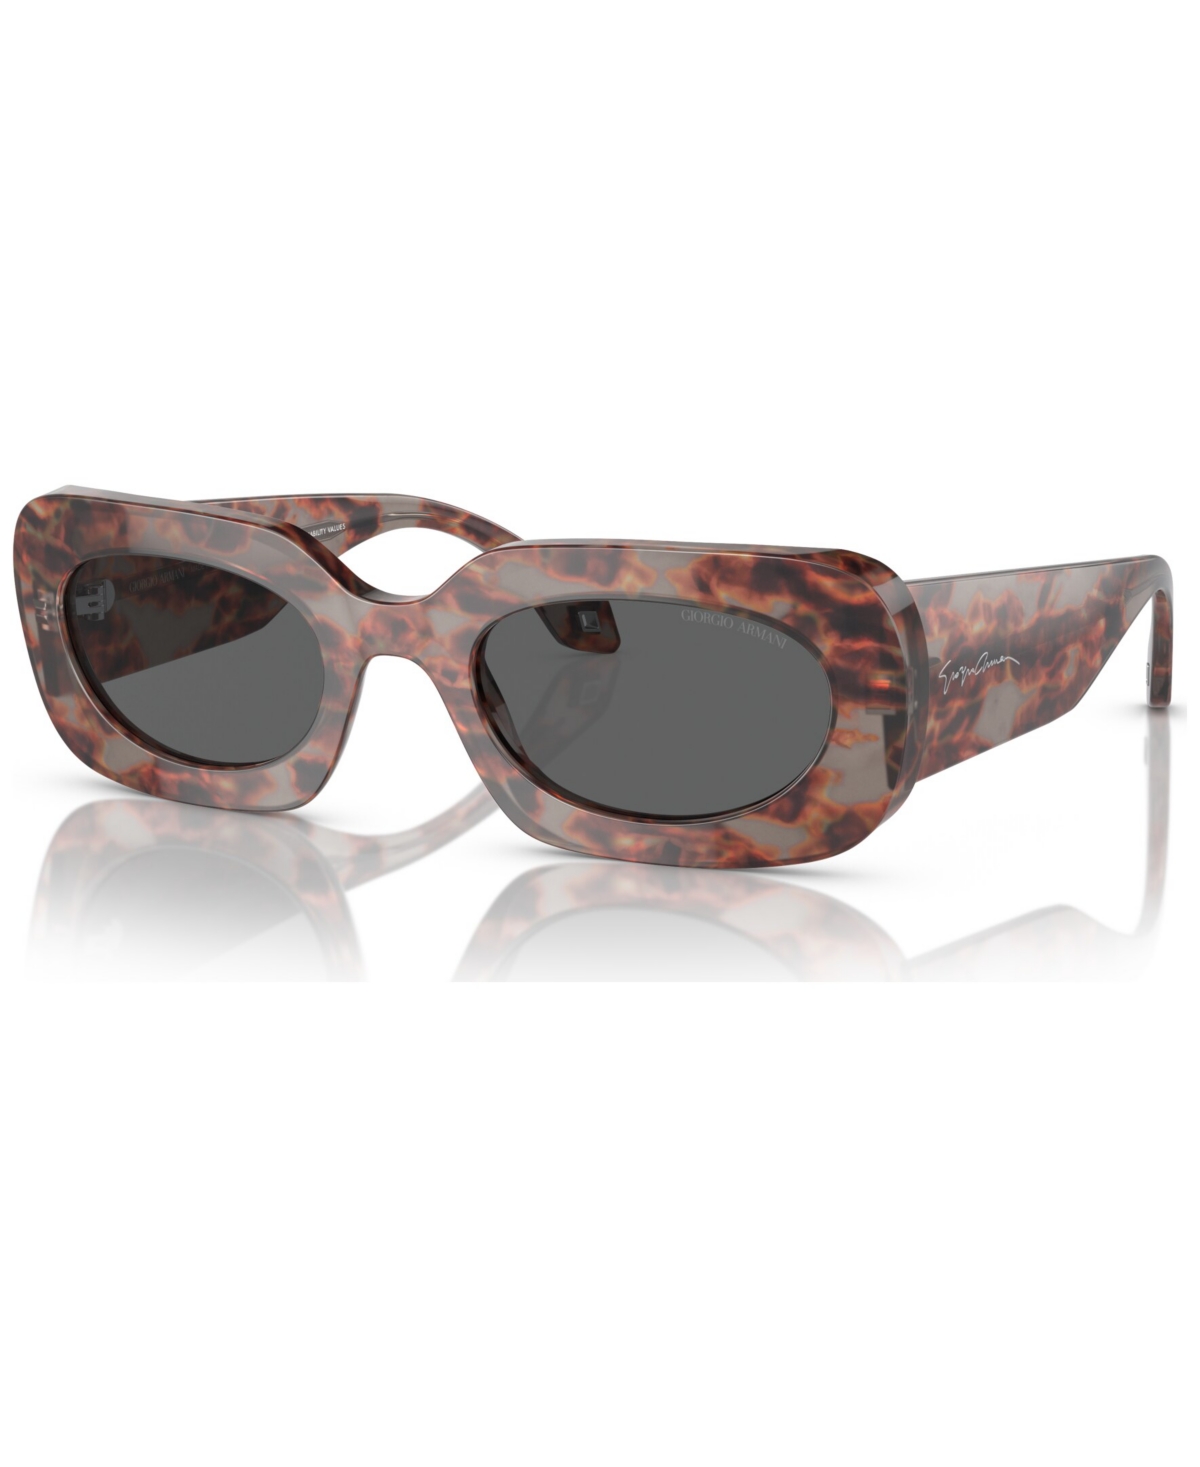 Women's Sunglasses, AR8182 - Gray Havana